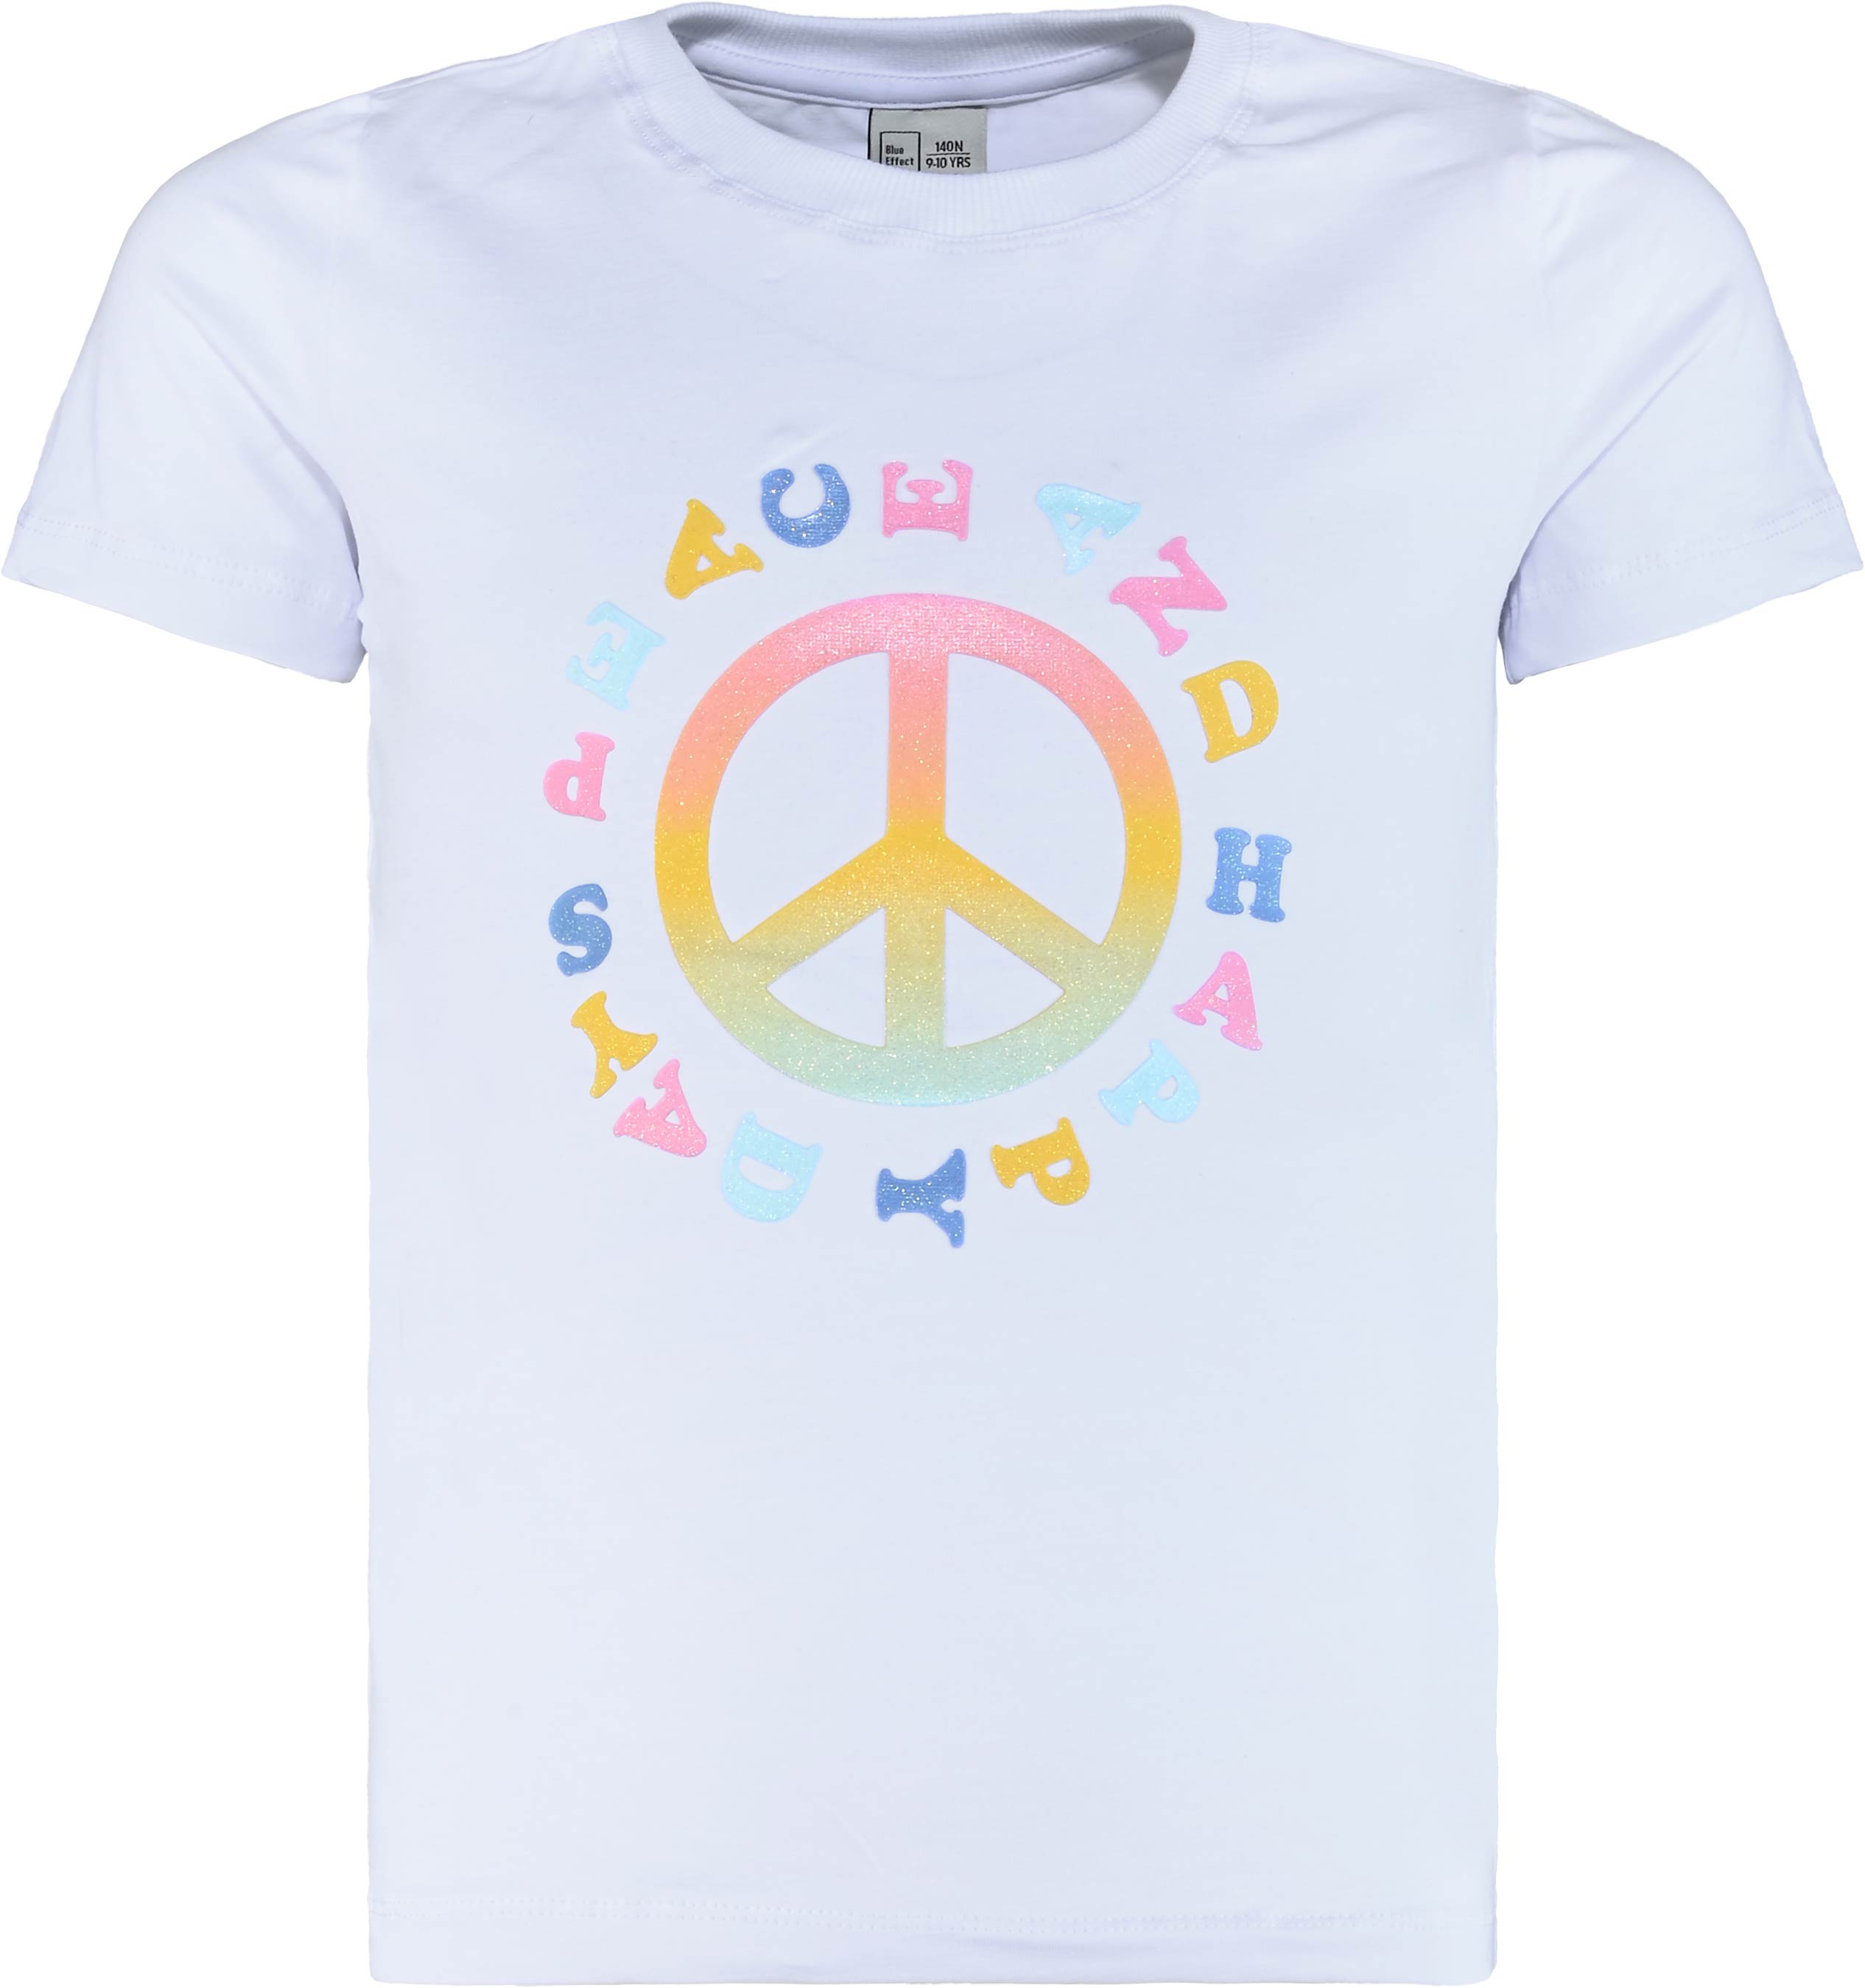 5872-JRNY Girls T-Shirt -Peace